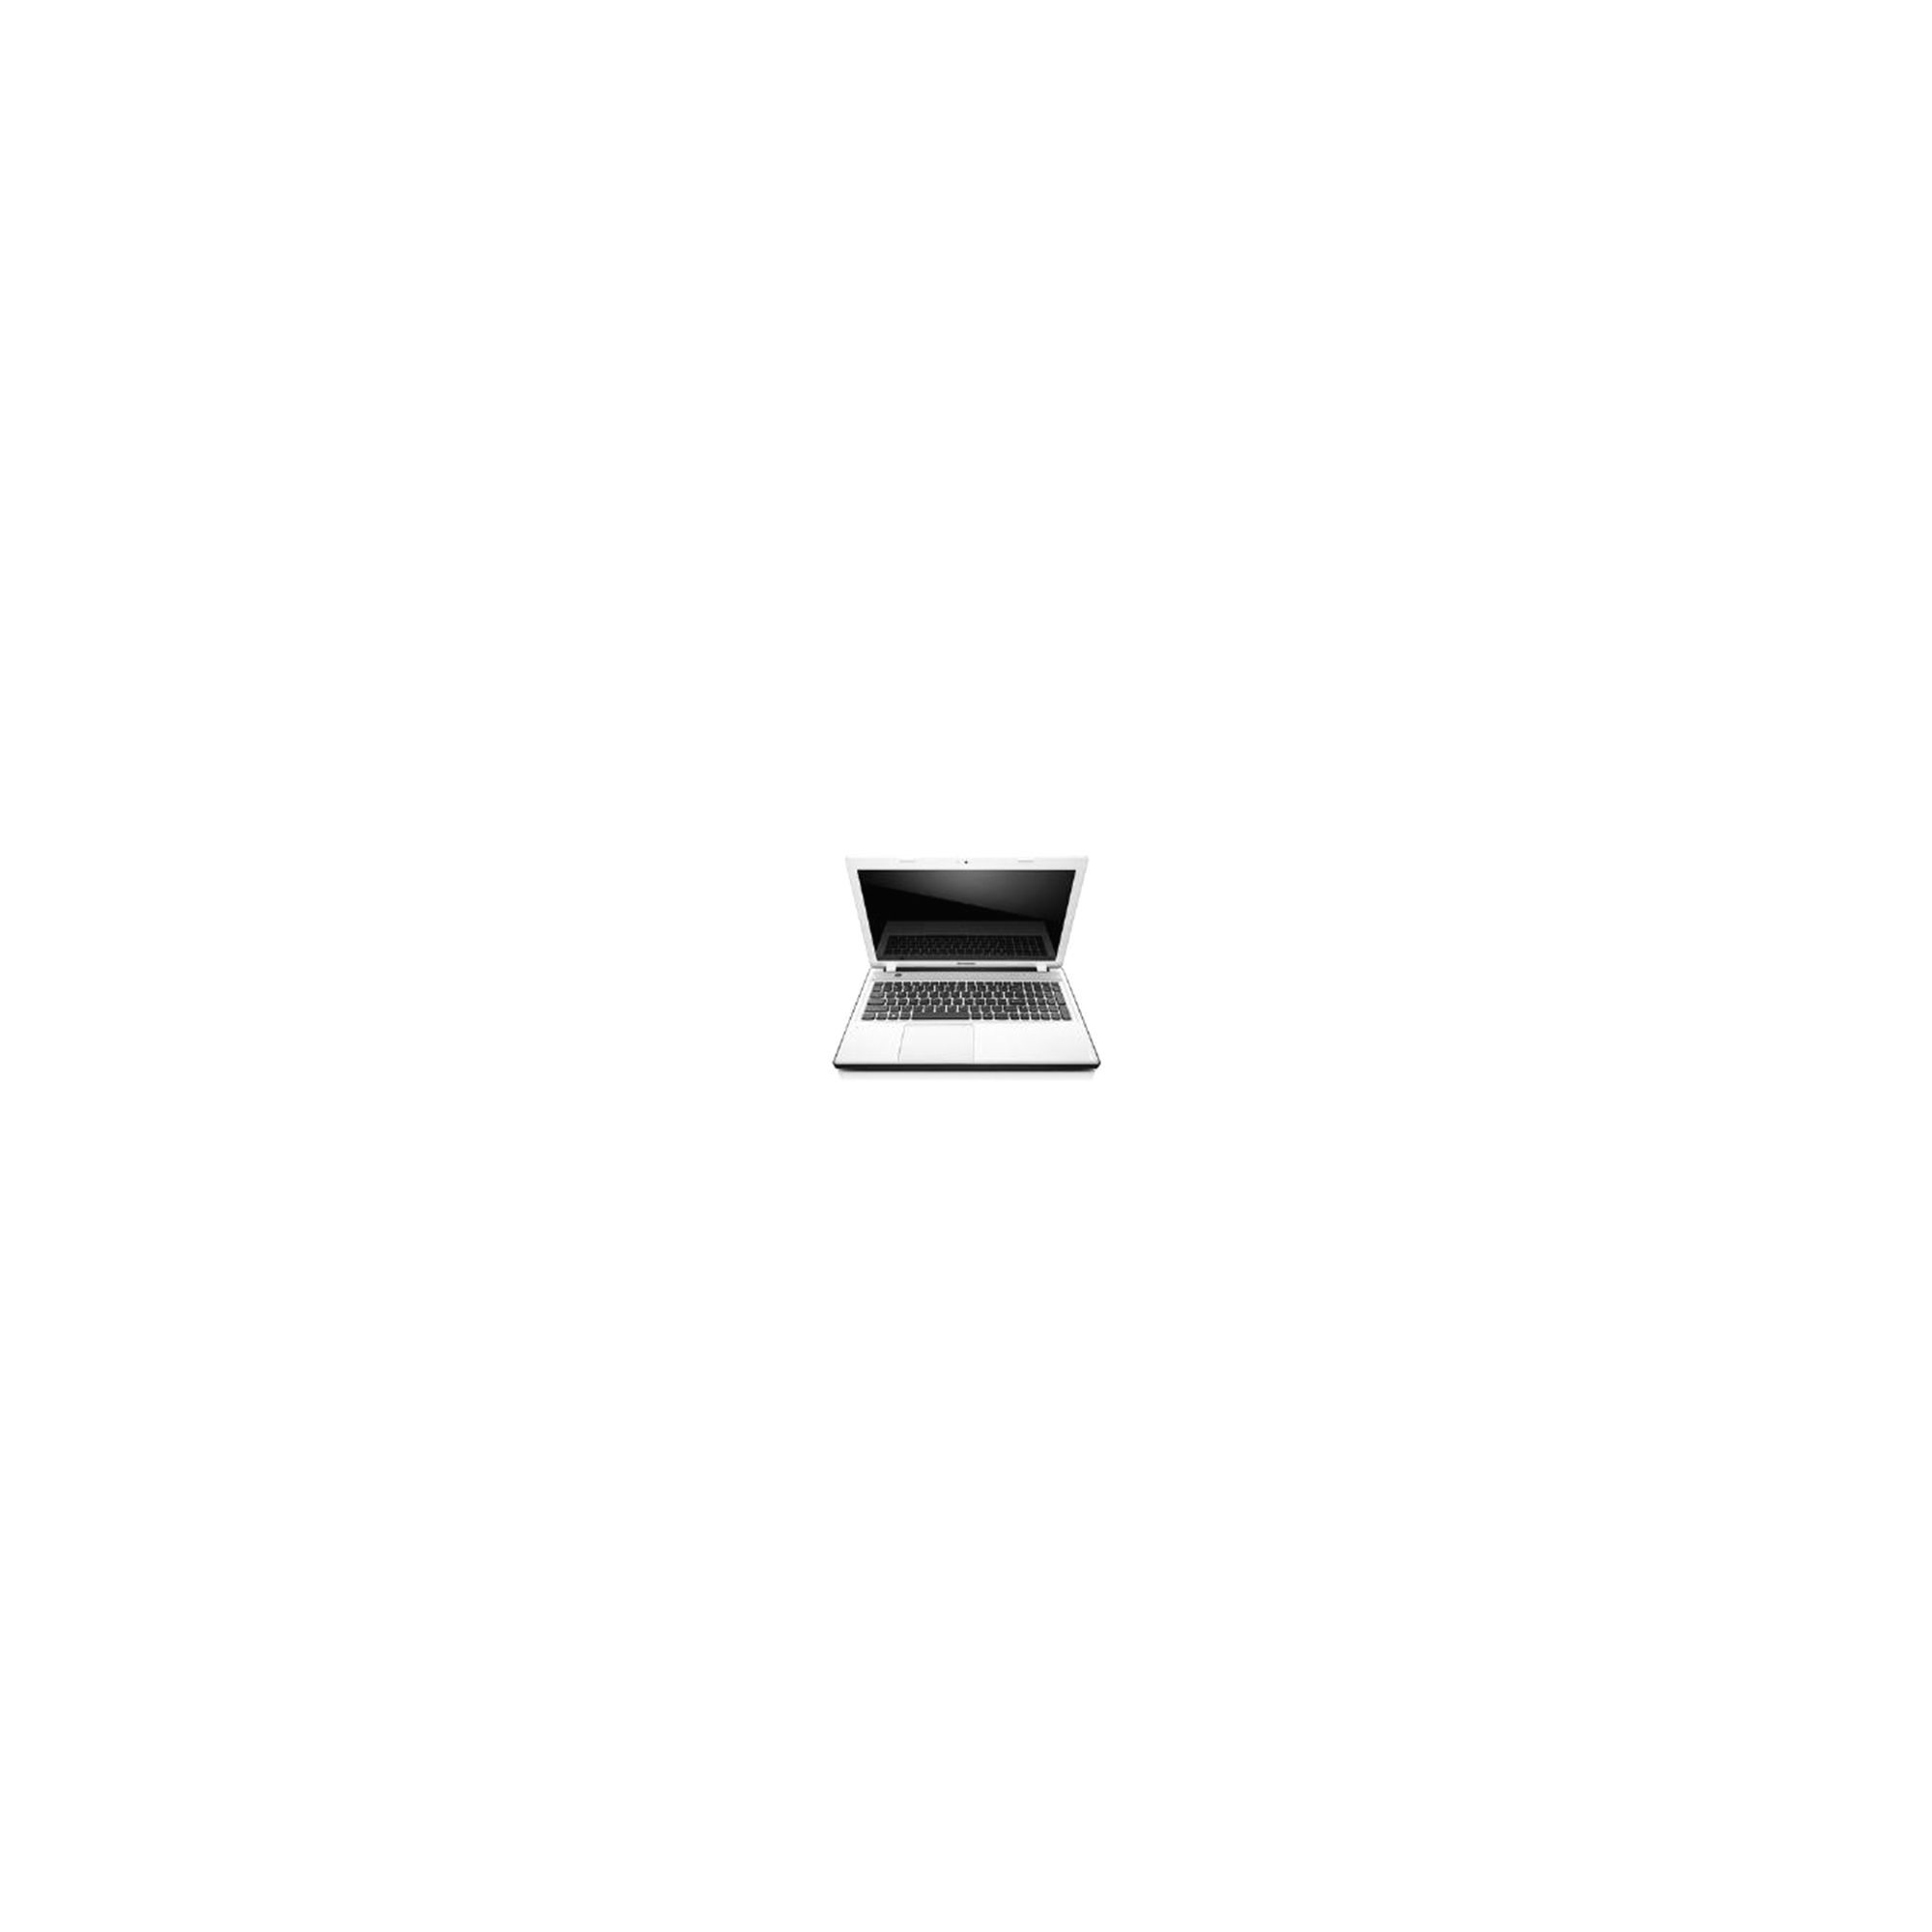 Lenovo IdeaPad Z580 2151KAG (15.6 inch) Notebook Core i5 (3230M) 2.6GHz 8GB 1TB DVD±RW WLAN Webcam Windows 8 (Intel HD Graphics) White